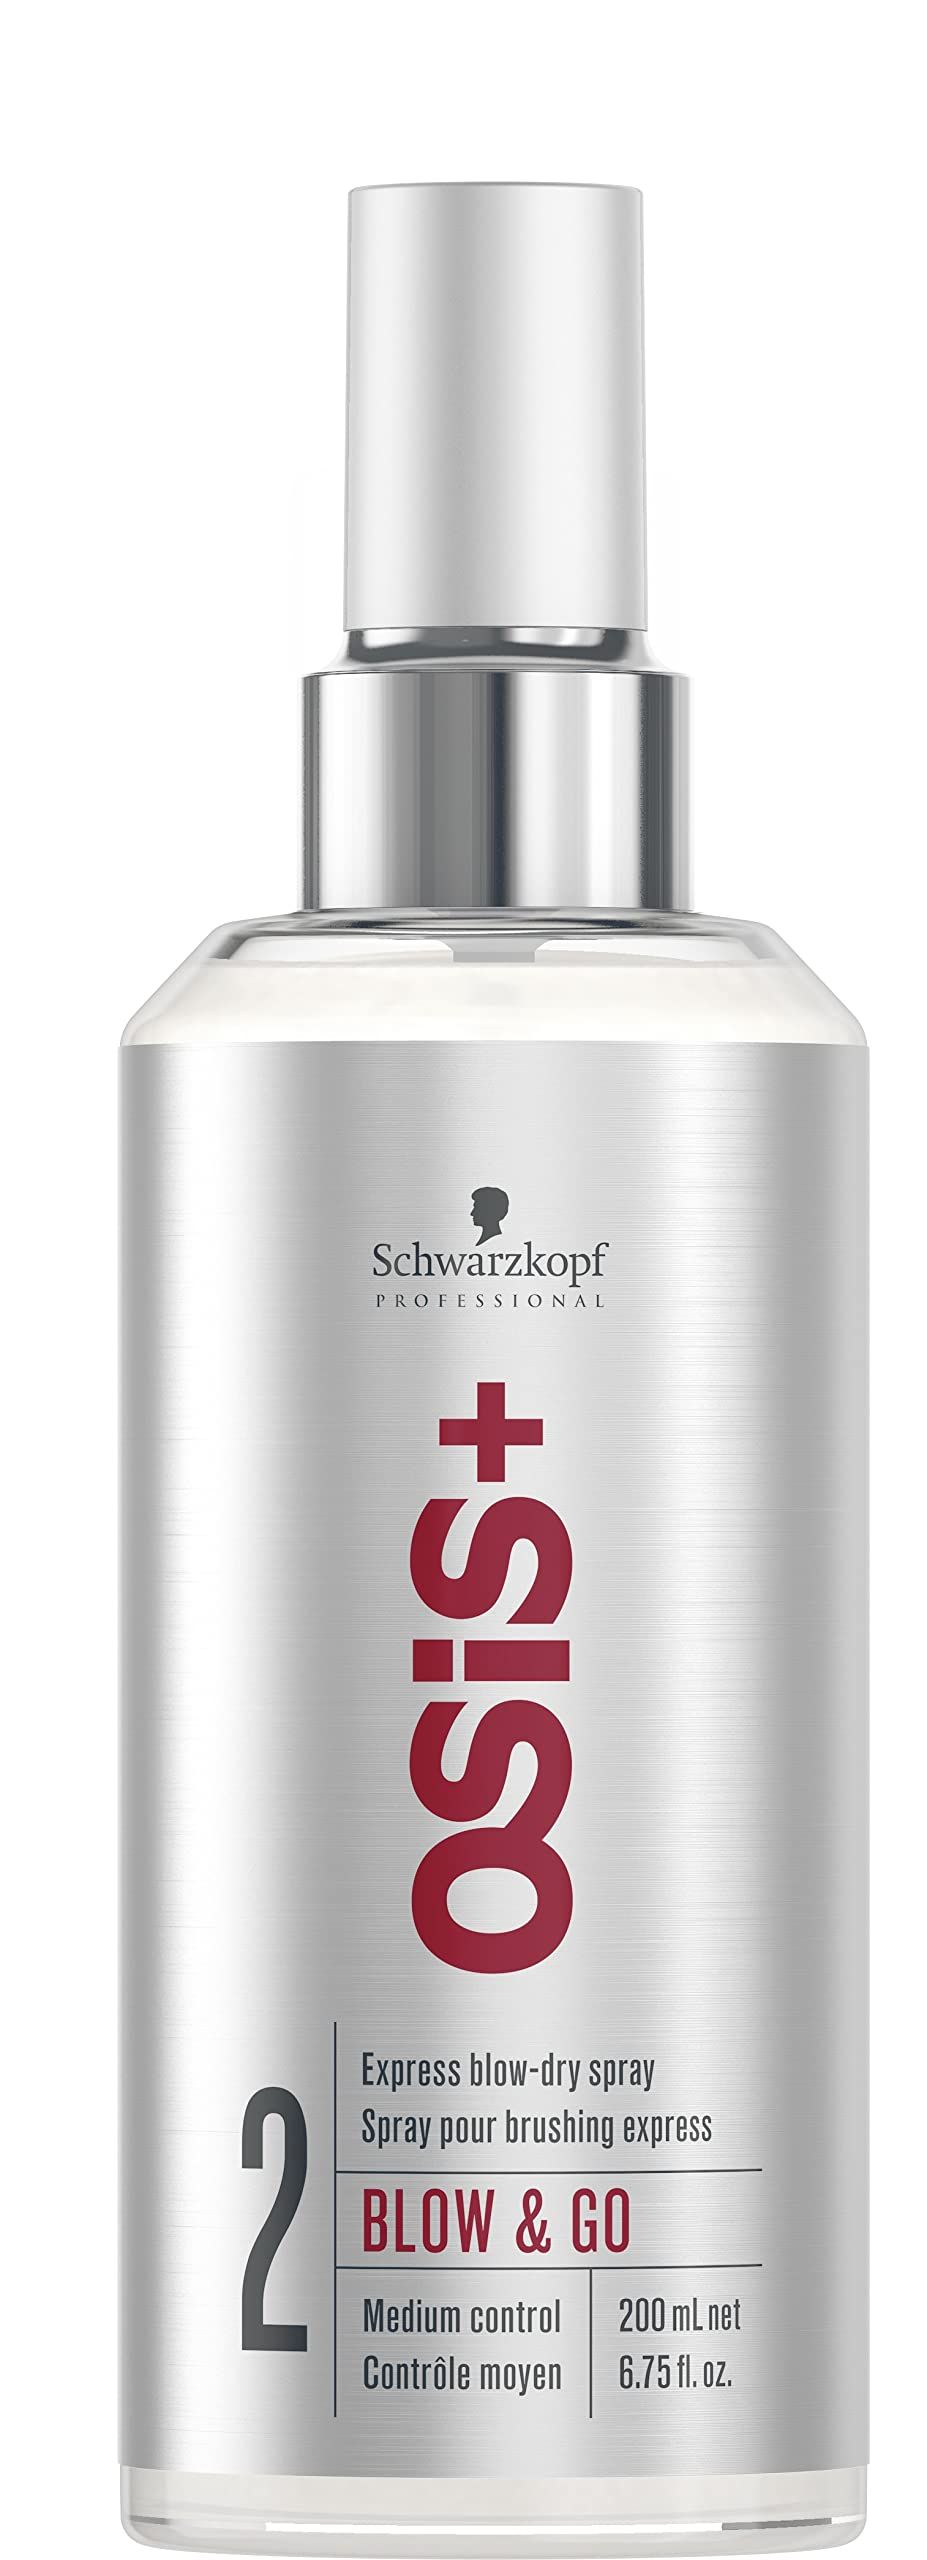 Schwarzkopf Professional Osis Blow & Go Express Blow Dry Spray Tratamiento Capilar - 200 ml